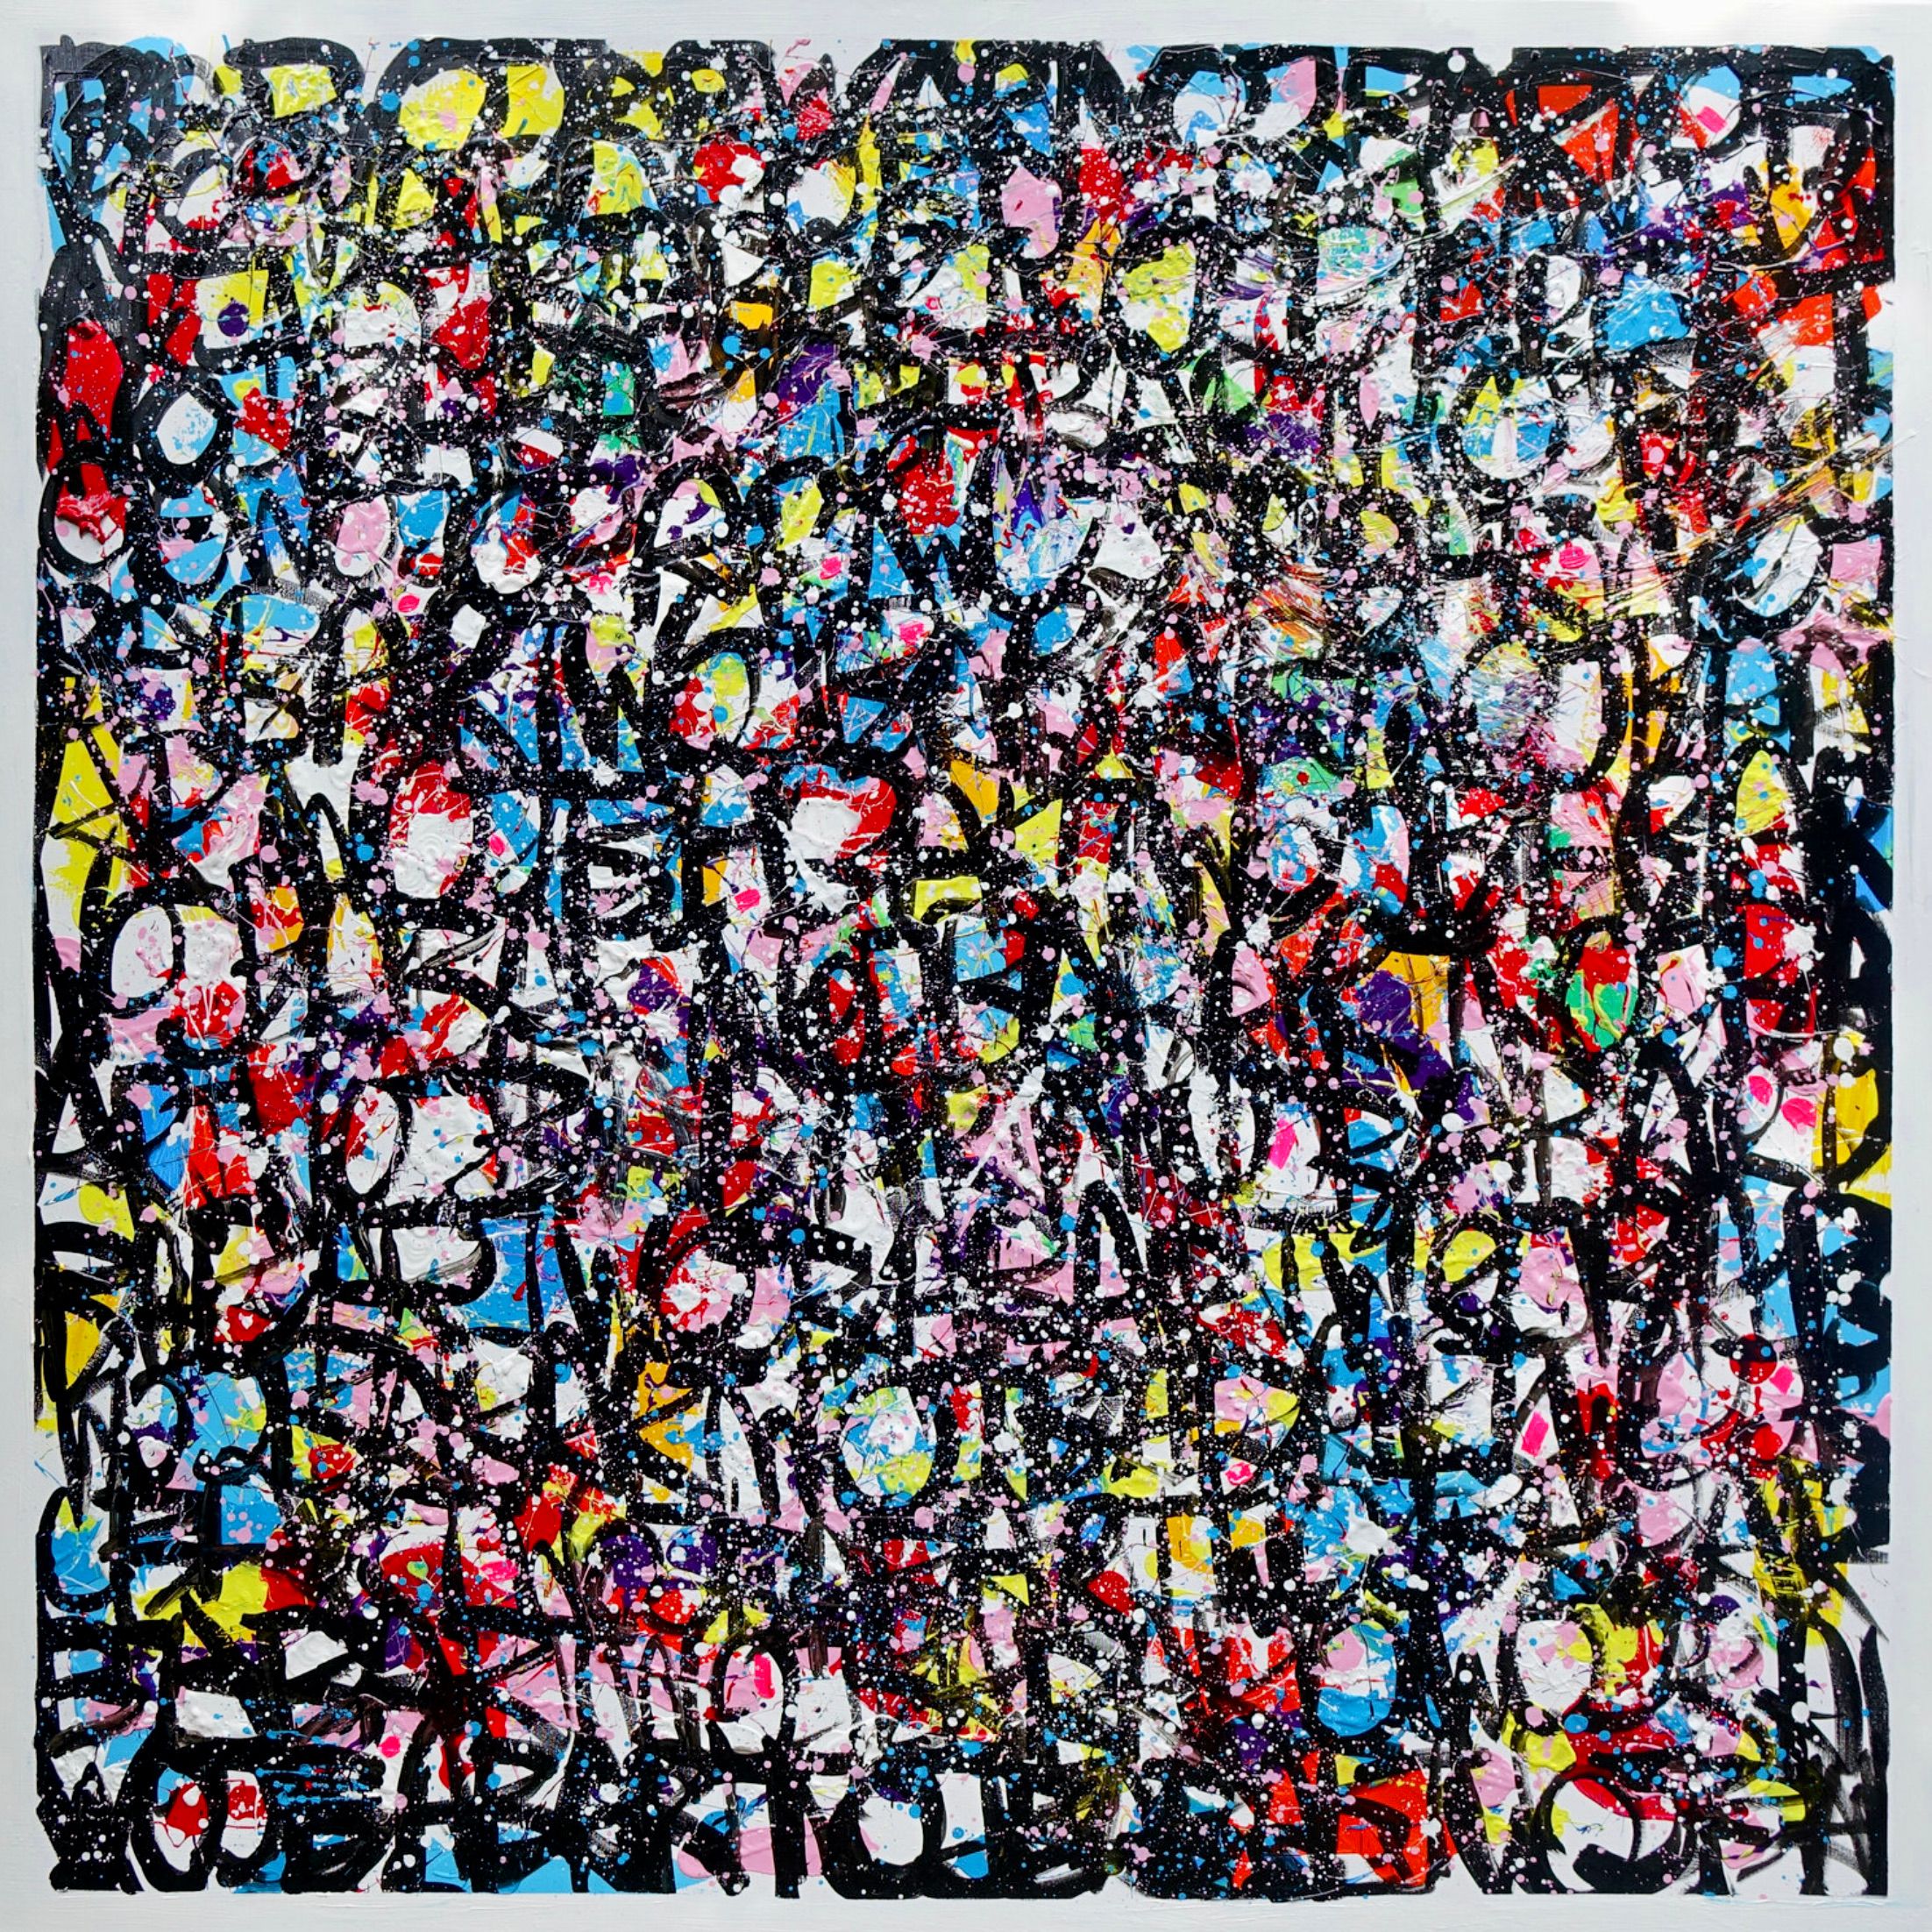 Wojtek Babski, "Graffiti abstracto 3", Pintura pop art abstracta de gran formato sobre lienzo